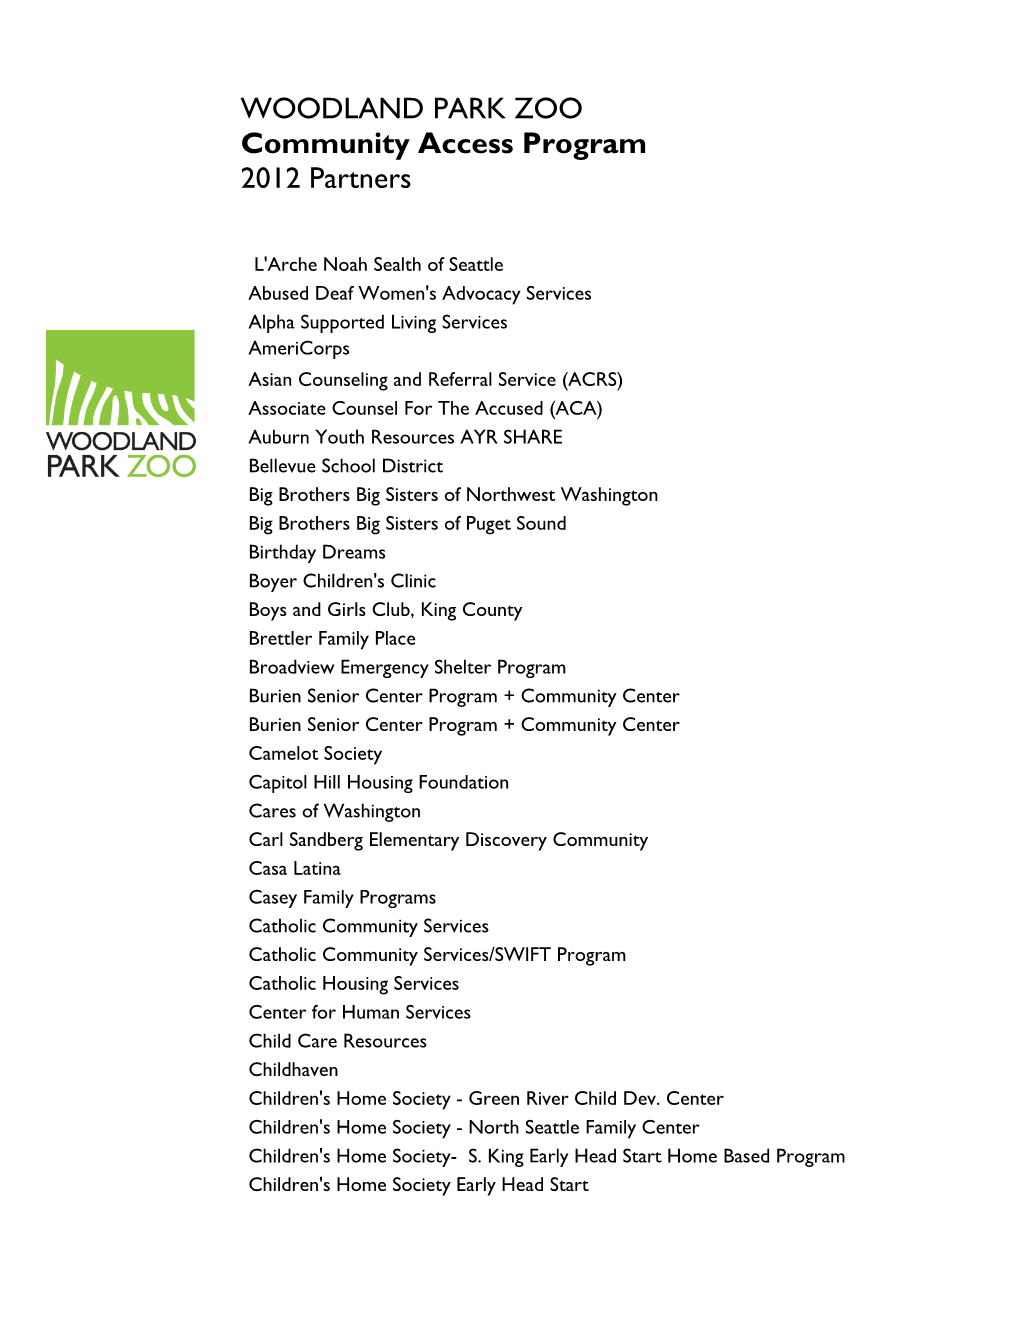 WOODLAND PARK ZOO Community Access Program 2012 Partners